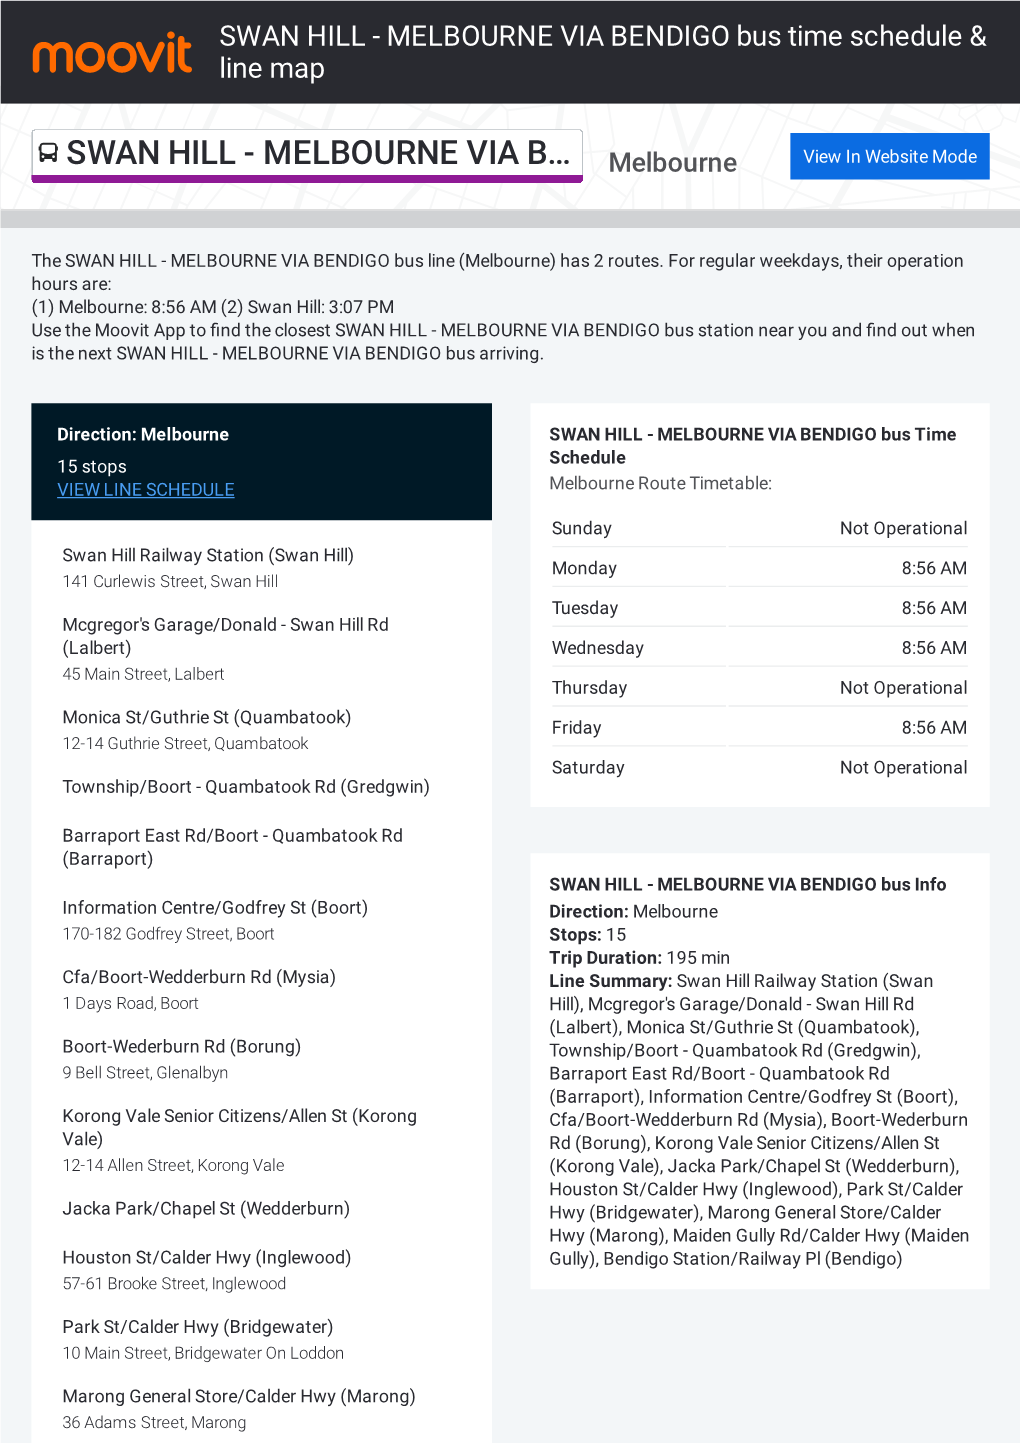 SWAN HILL - MELBOURNE VIA BENDIGO Bus Time Schedule & Line Map